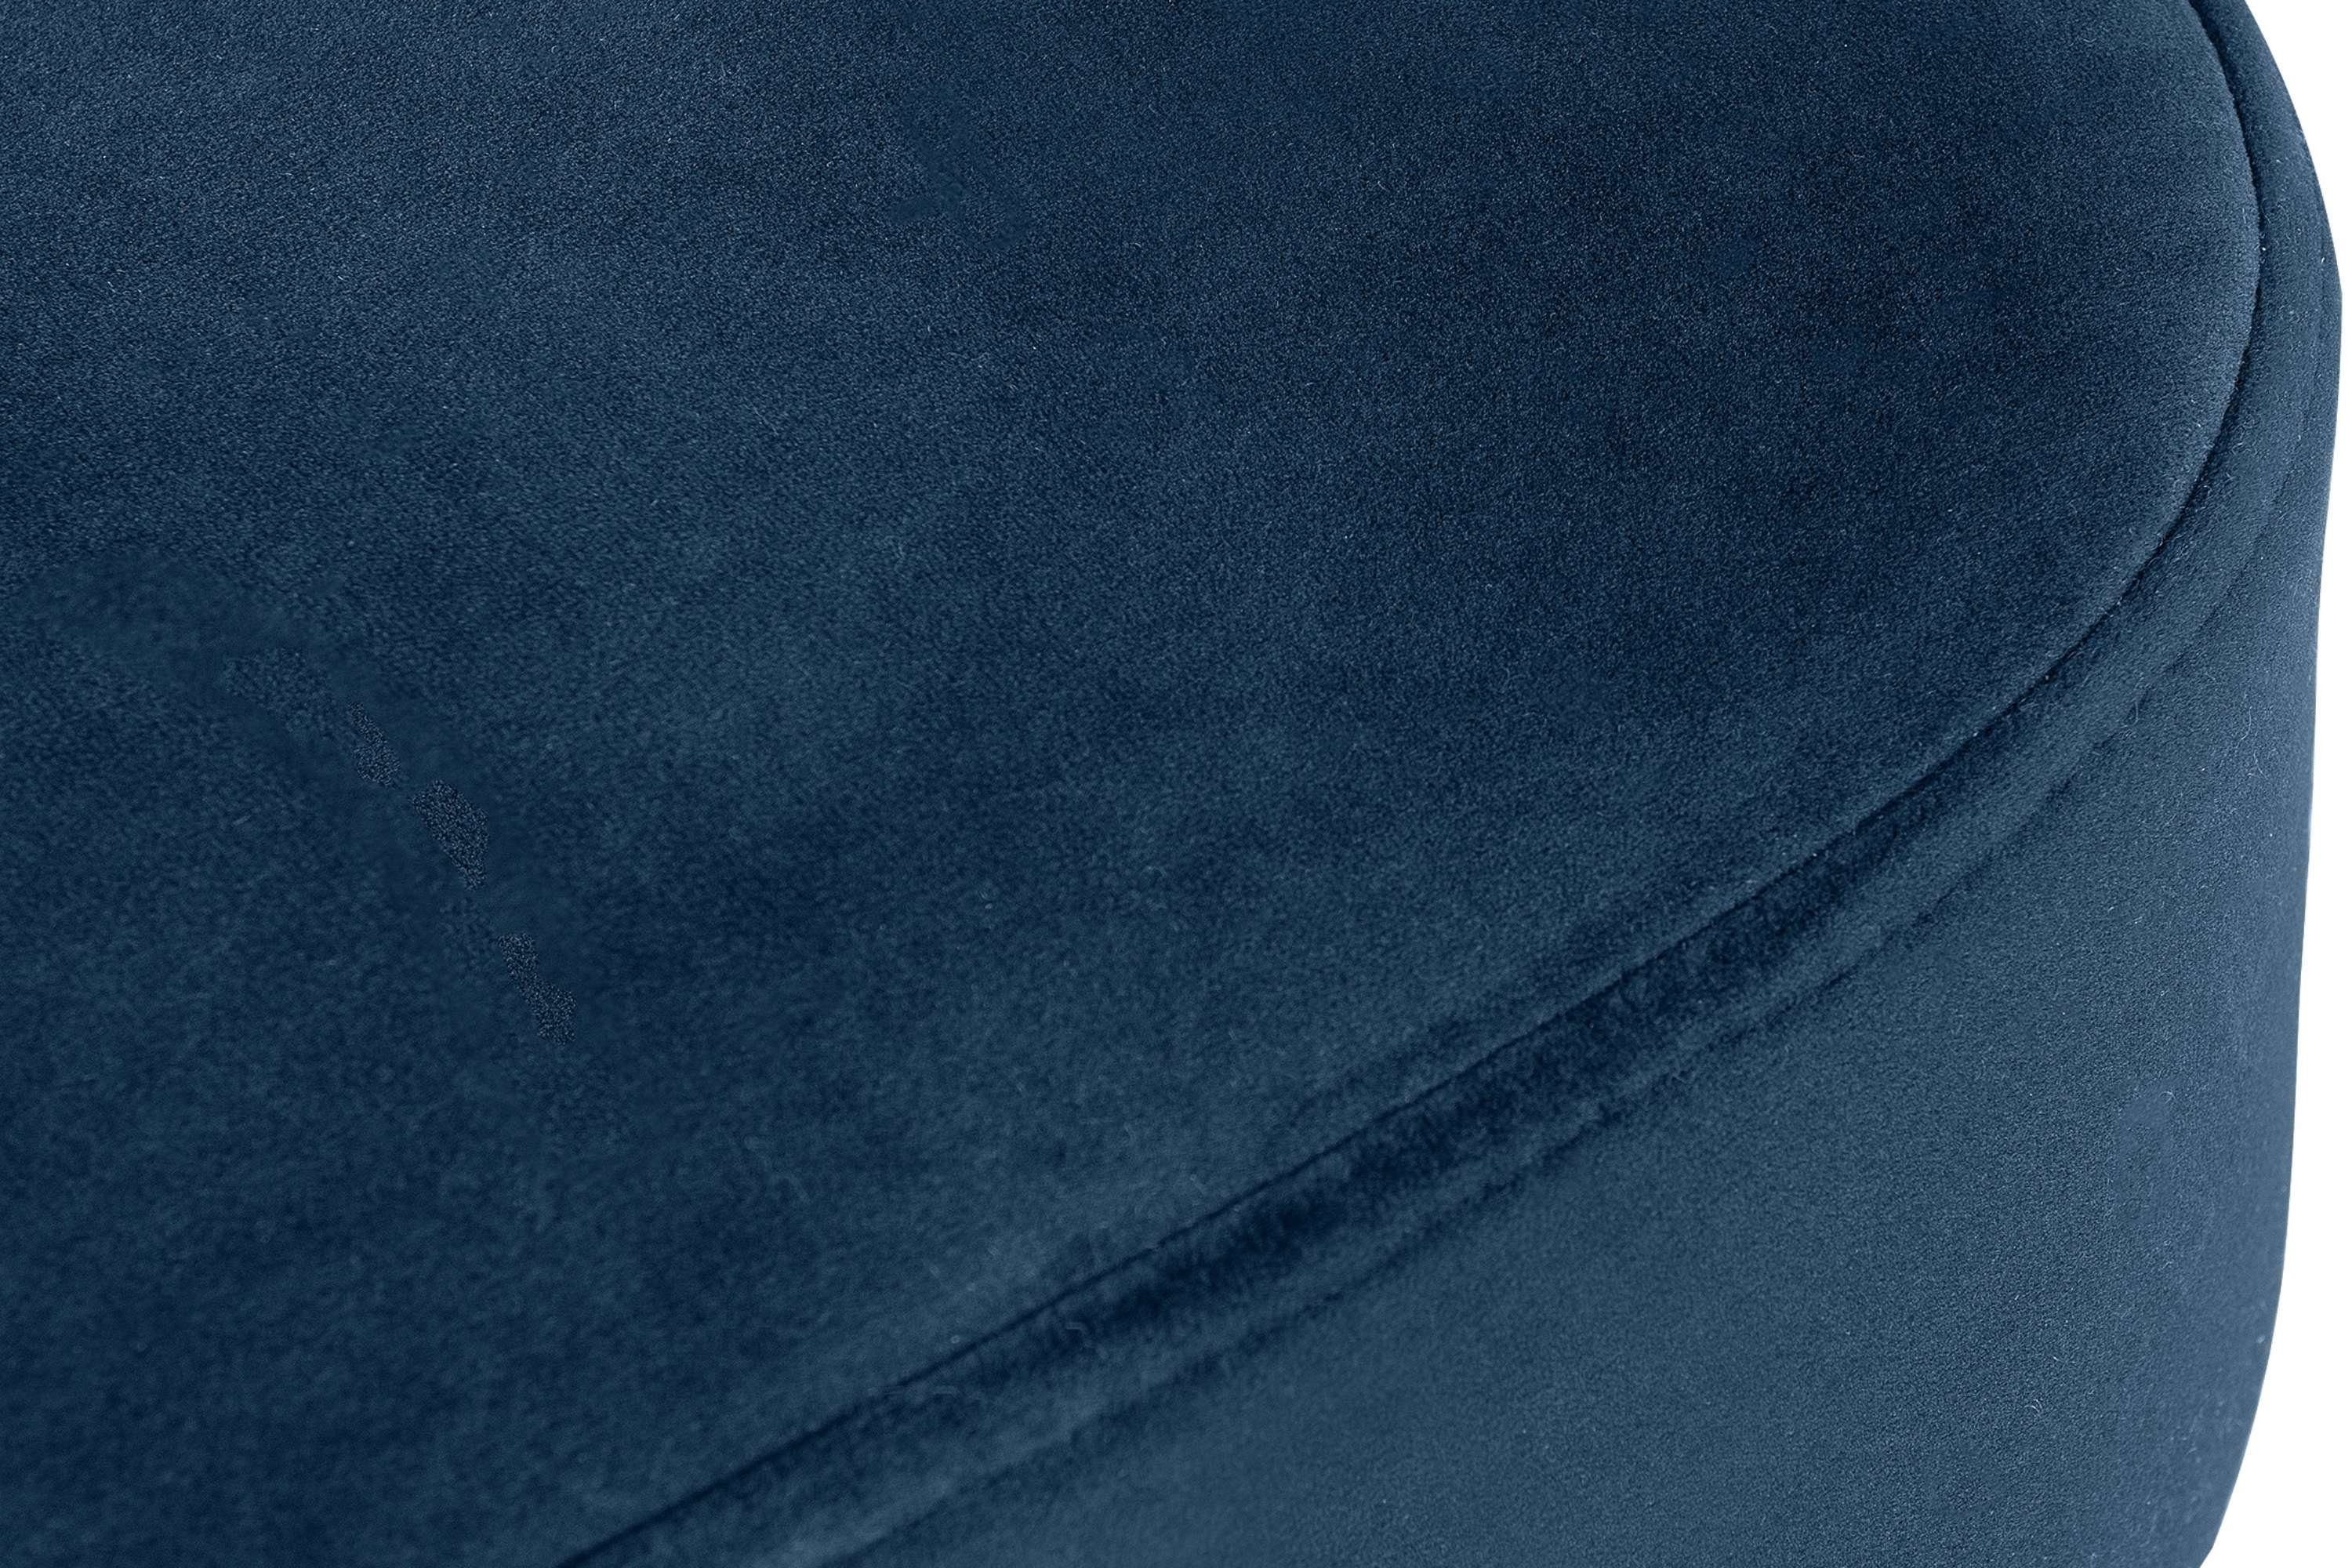 Konsimo Cocktailsessel DUCO Sessel, Ziernaht Buche der an Rückenlehne, auf dunkelblau dunkelblau/buche aus | Beinen hohen